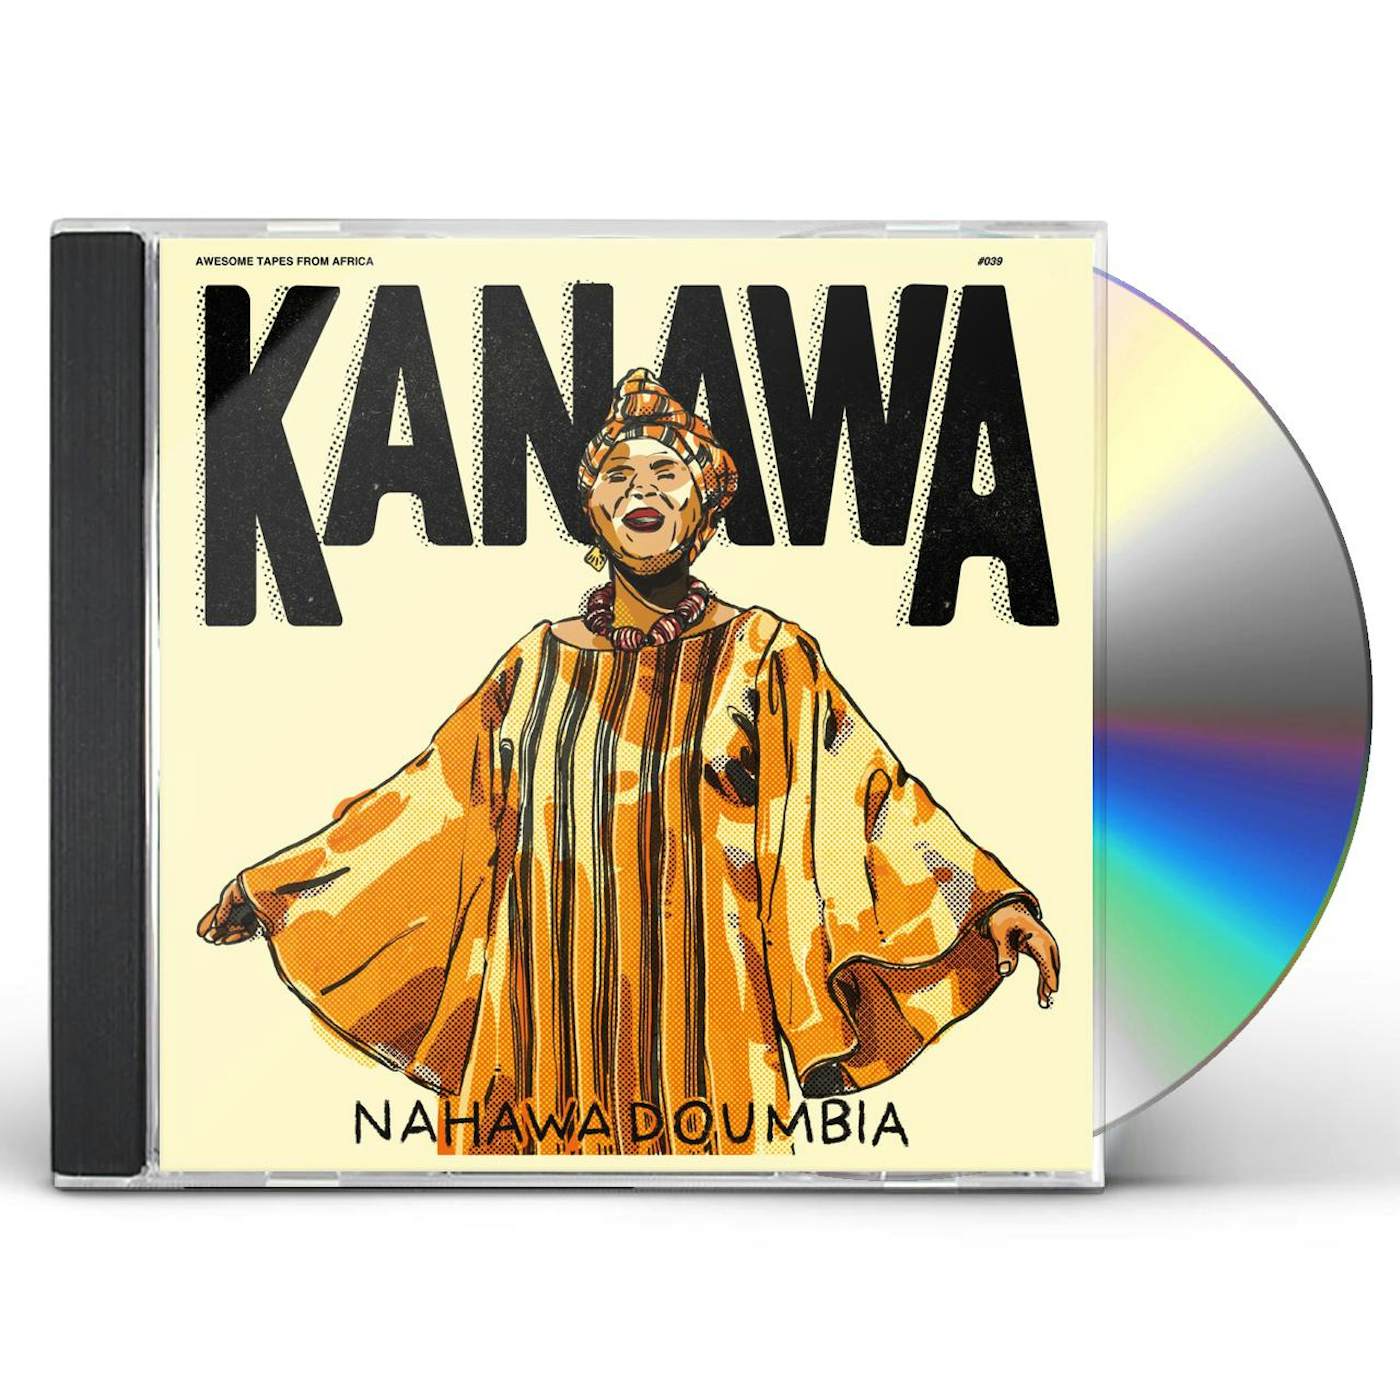 Nahawa Doumbia KANAWA CD